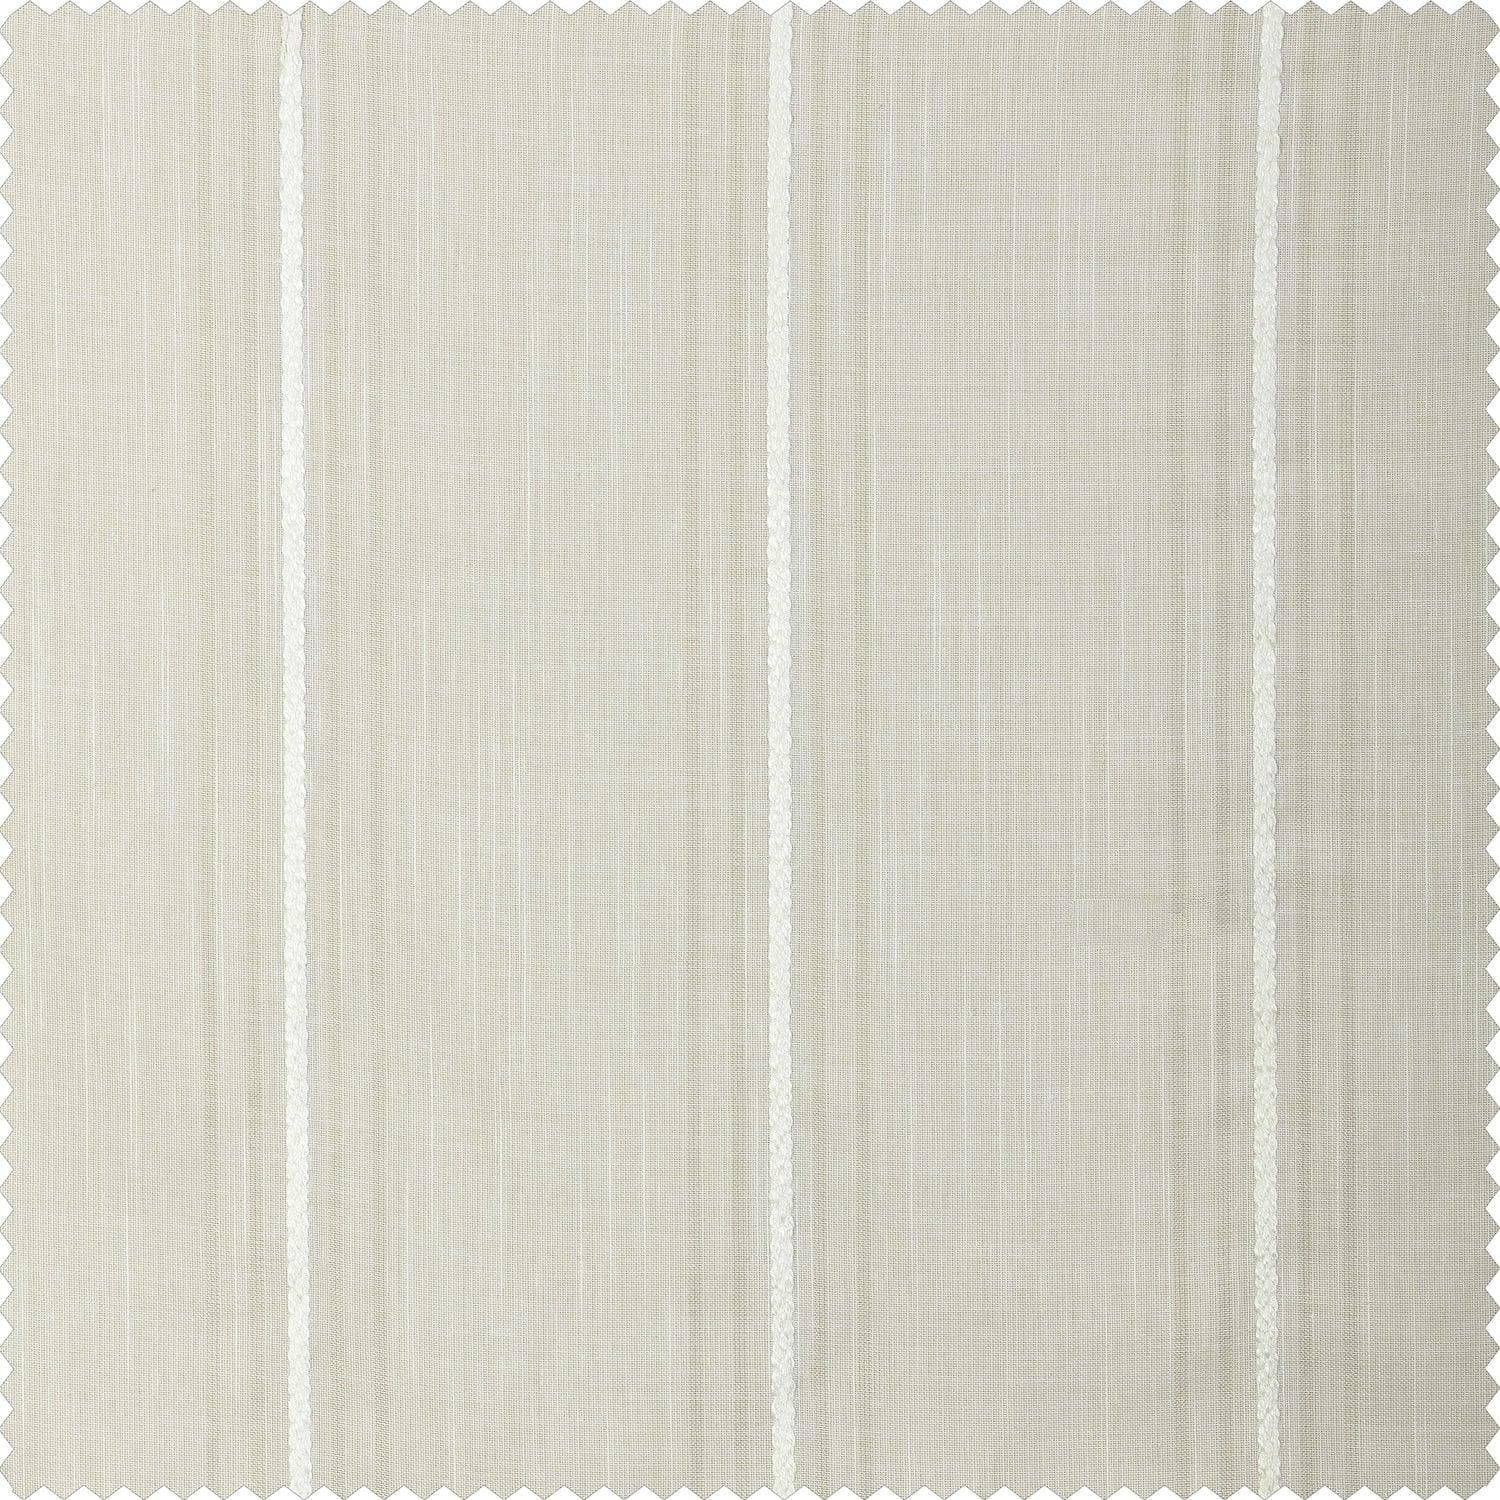 Meridian White Striped Linen Sheer Curtain Pair (2 Panels)